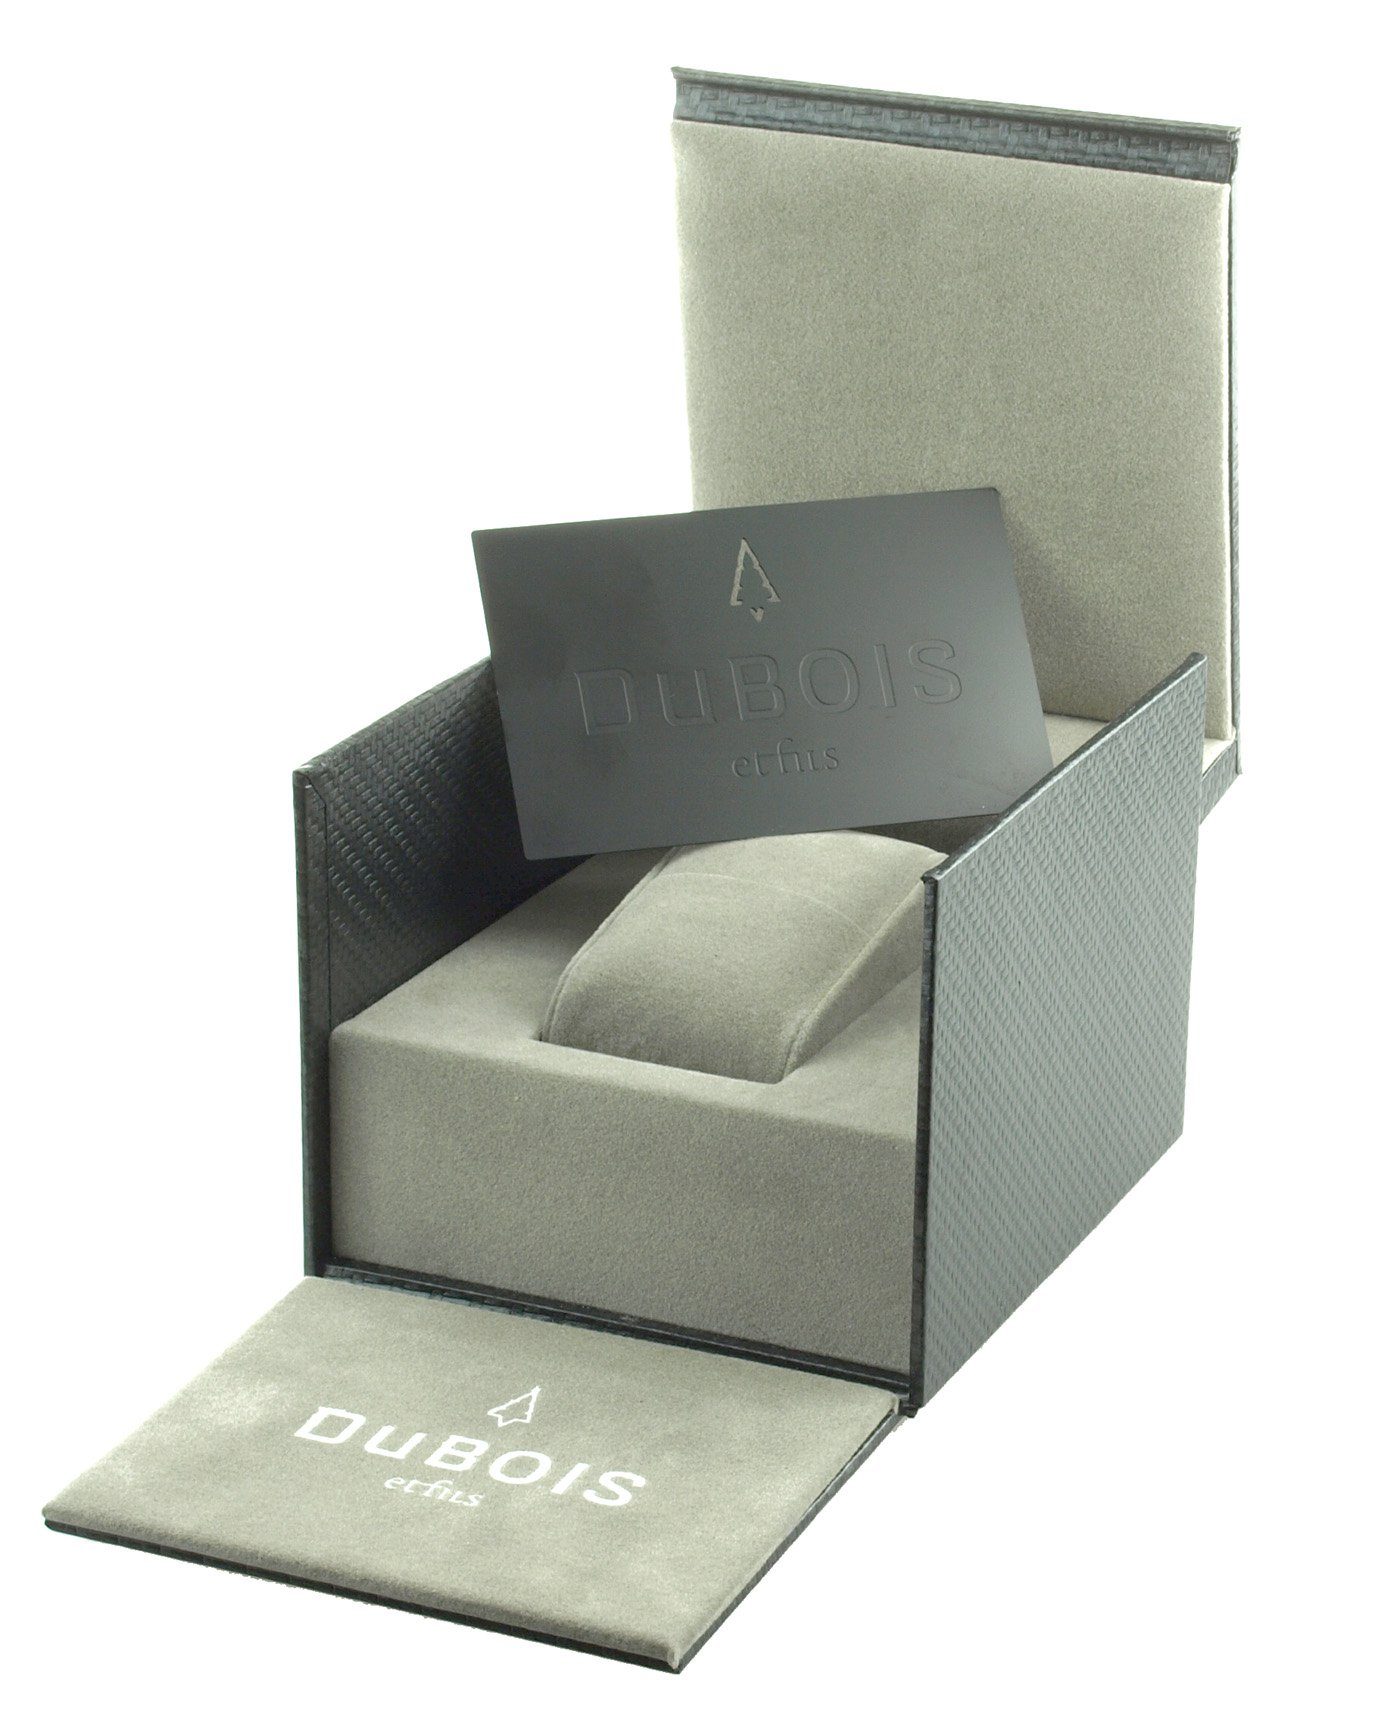 DuBois et fils DuBois Edition Uhr individuelle - 1 Chronograph Made 99 fils Automatikuhr Limitiert, DBF001-07 Stück, Herren et Limited Nummer Swiss